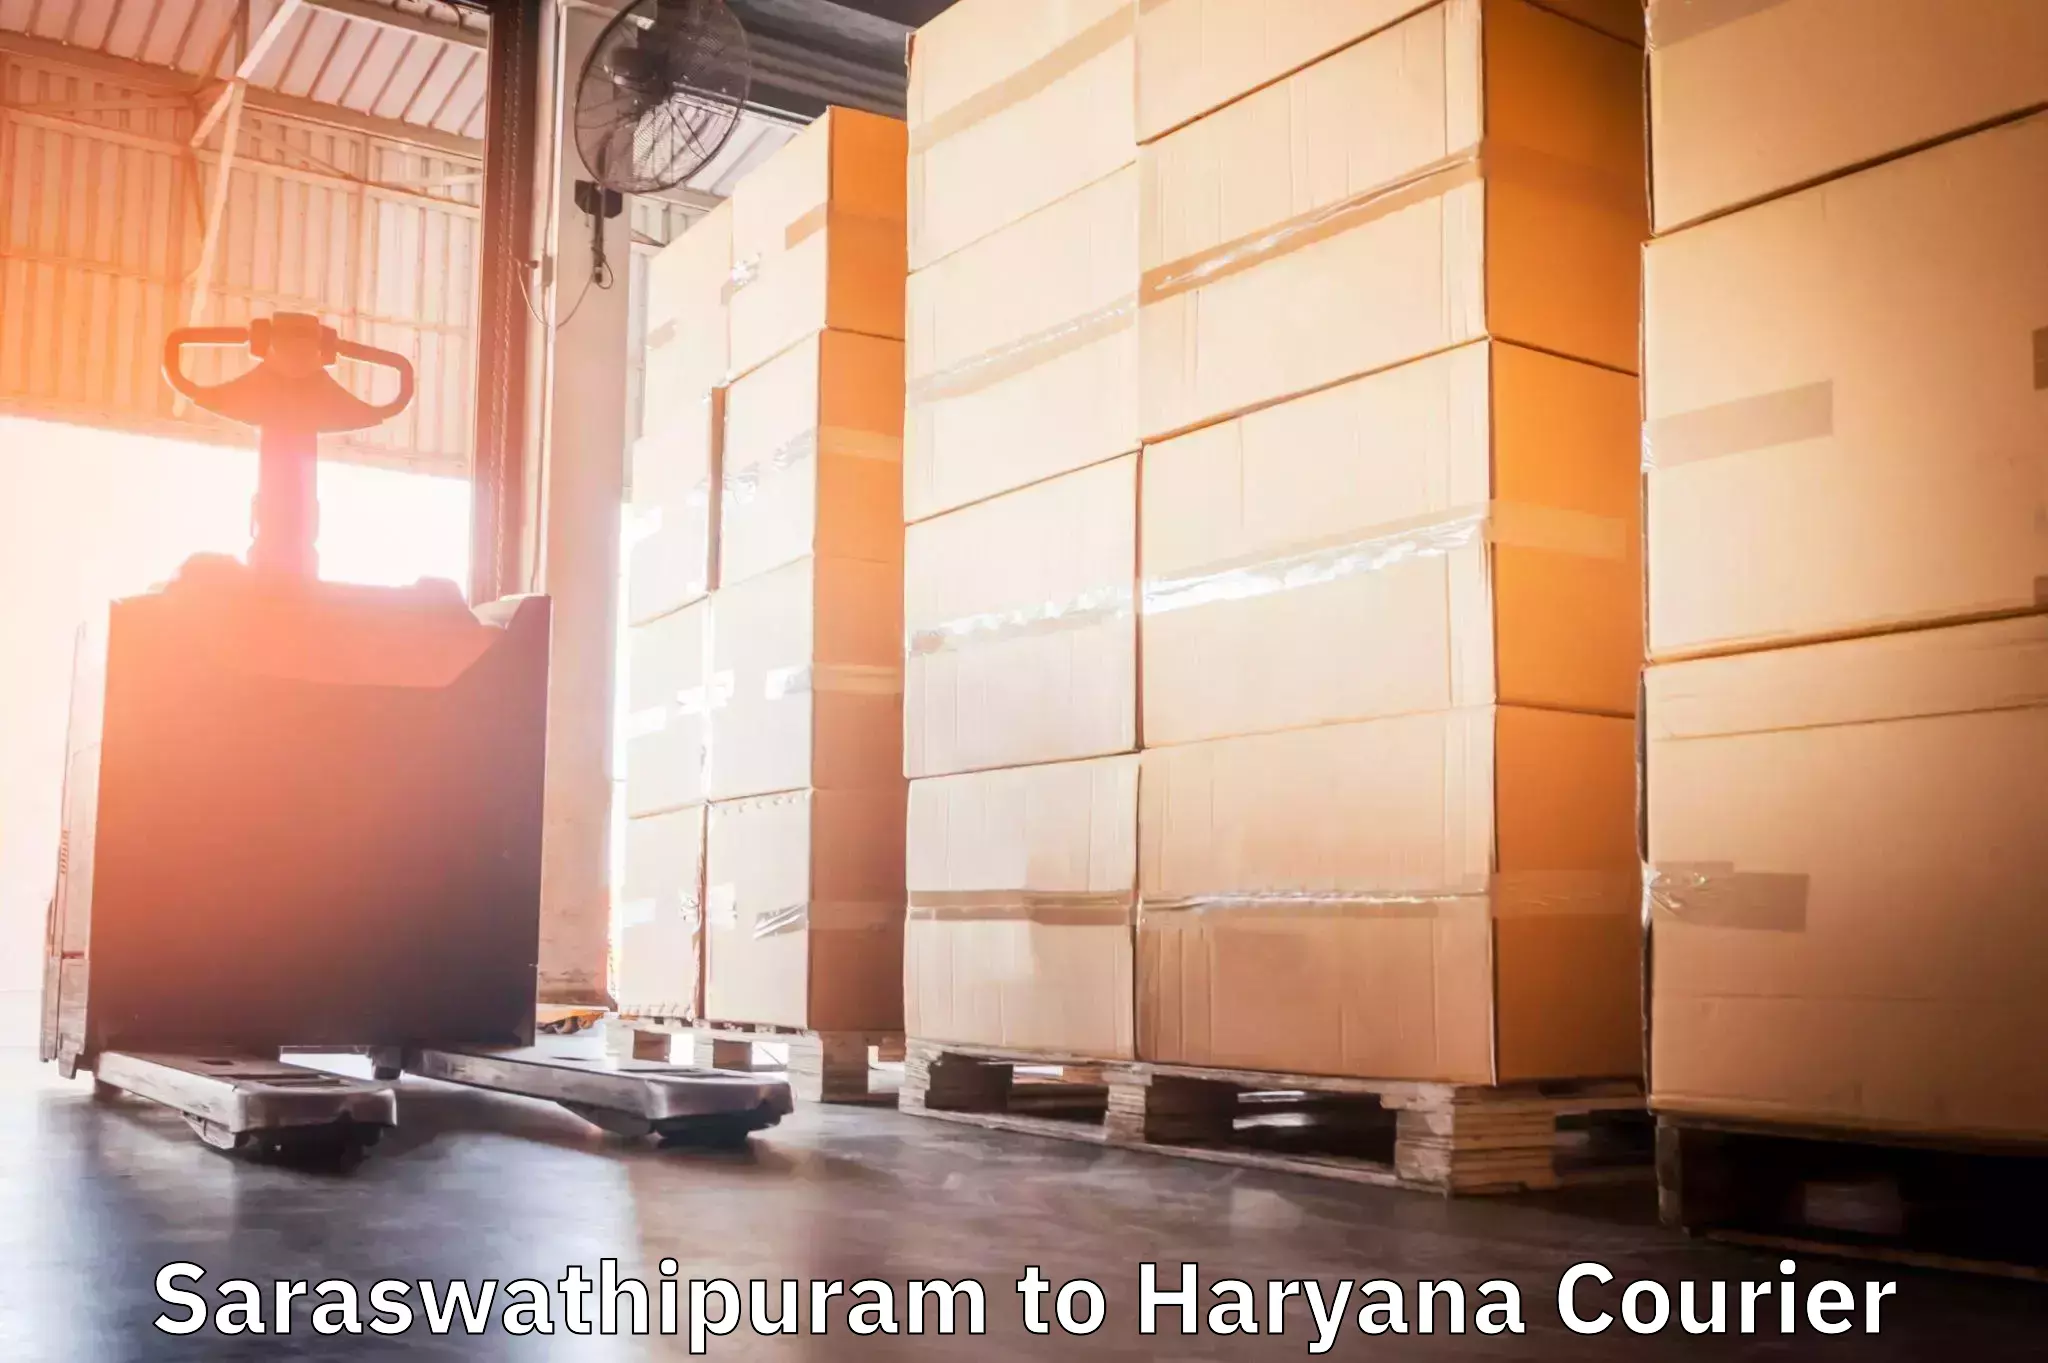 Doorstep delivery service Saraswathipuram to Haryana